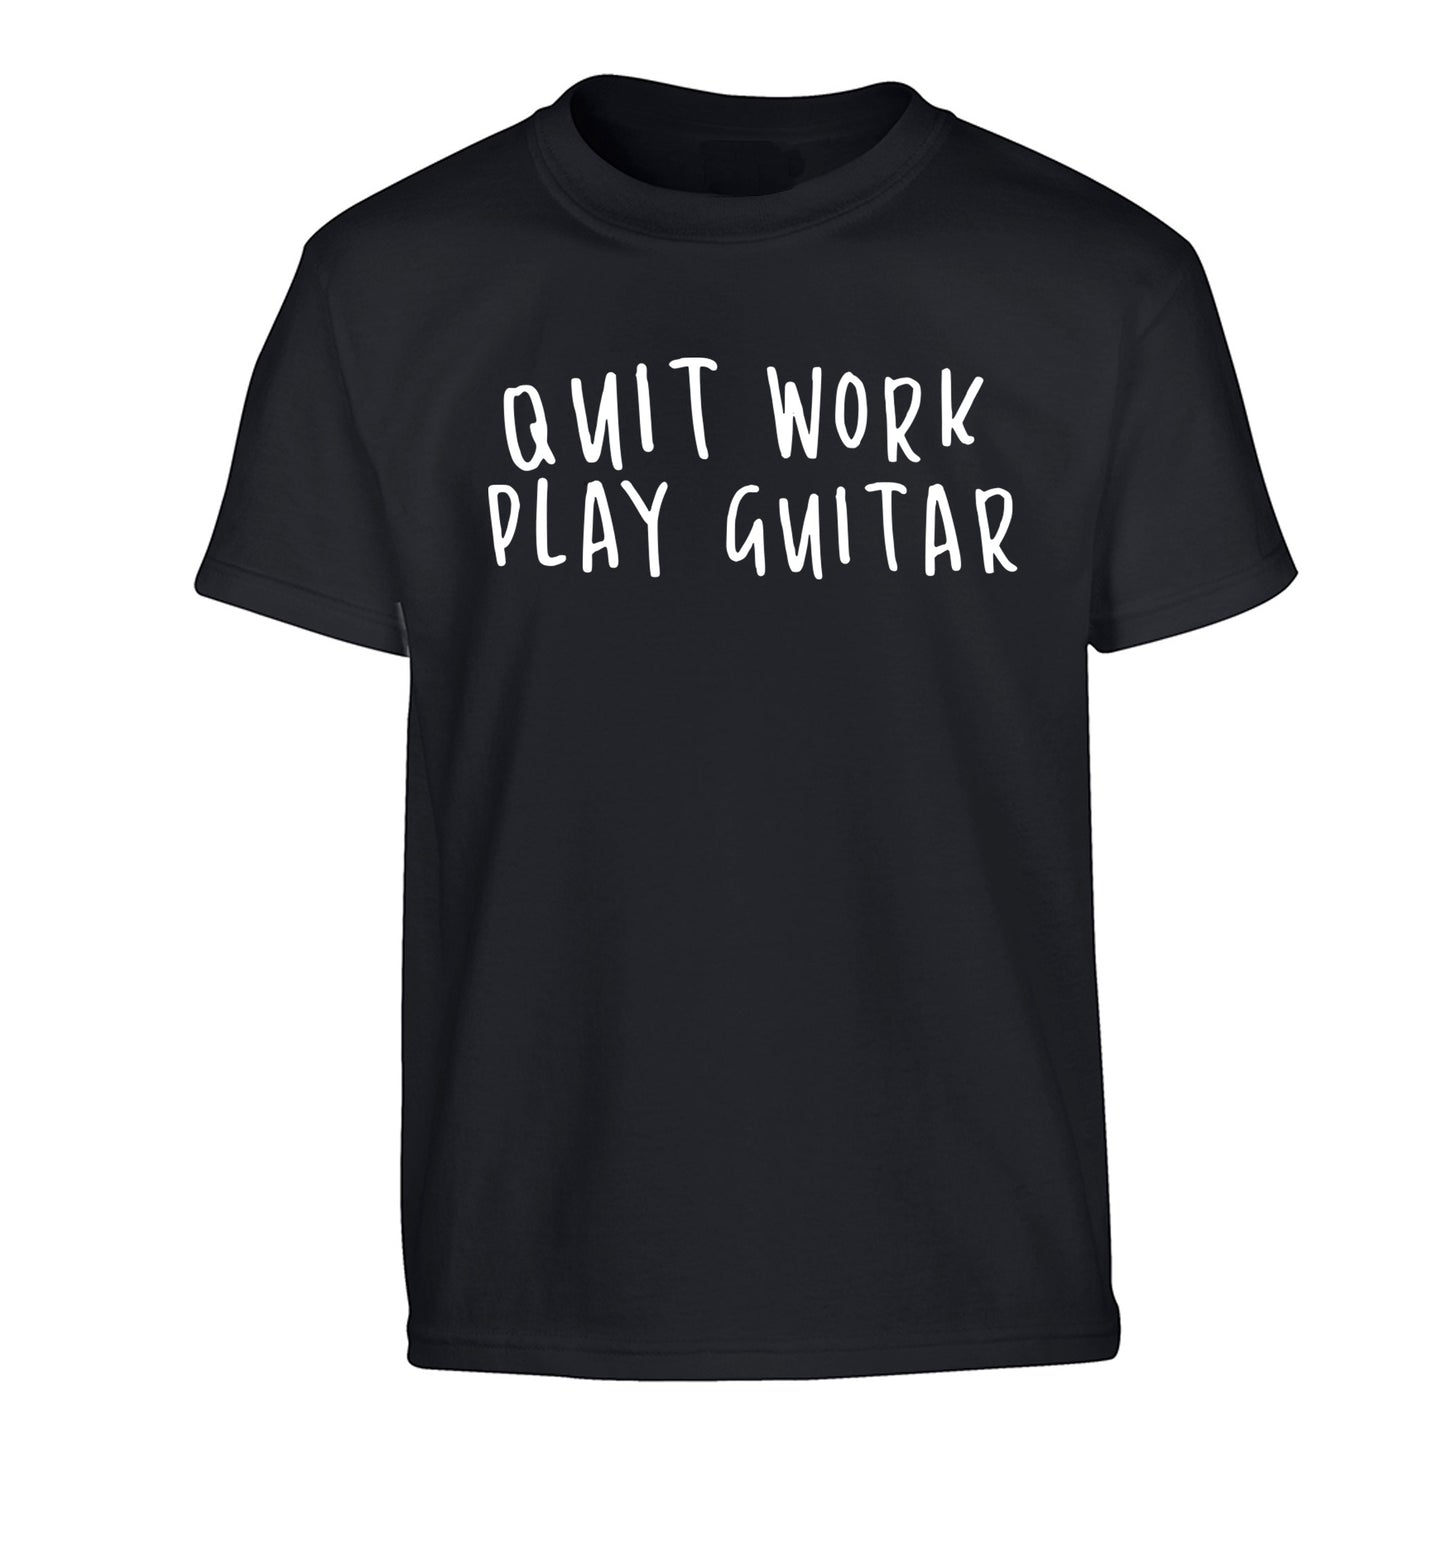 Quit work play guitar Children's black Tshirt 12-14 Years